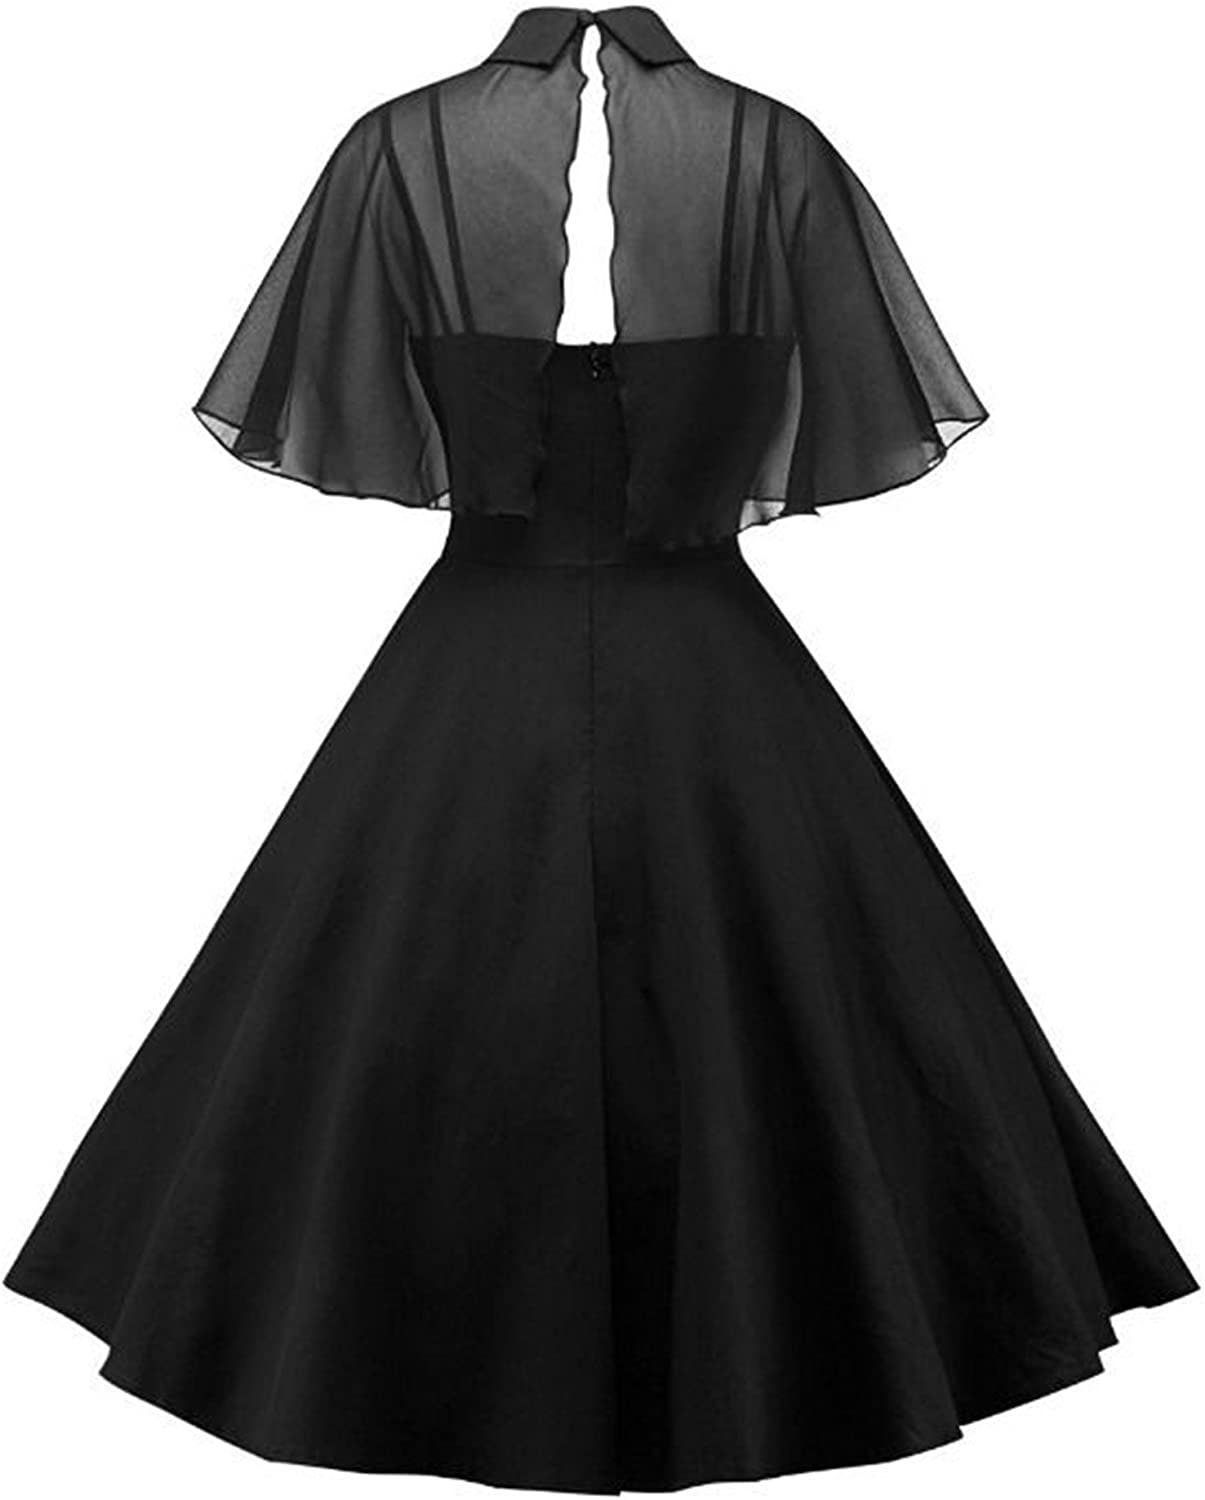 GownTown Women's 1950s Cloak Two-Piece Cocktail Dress 